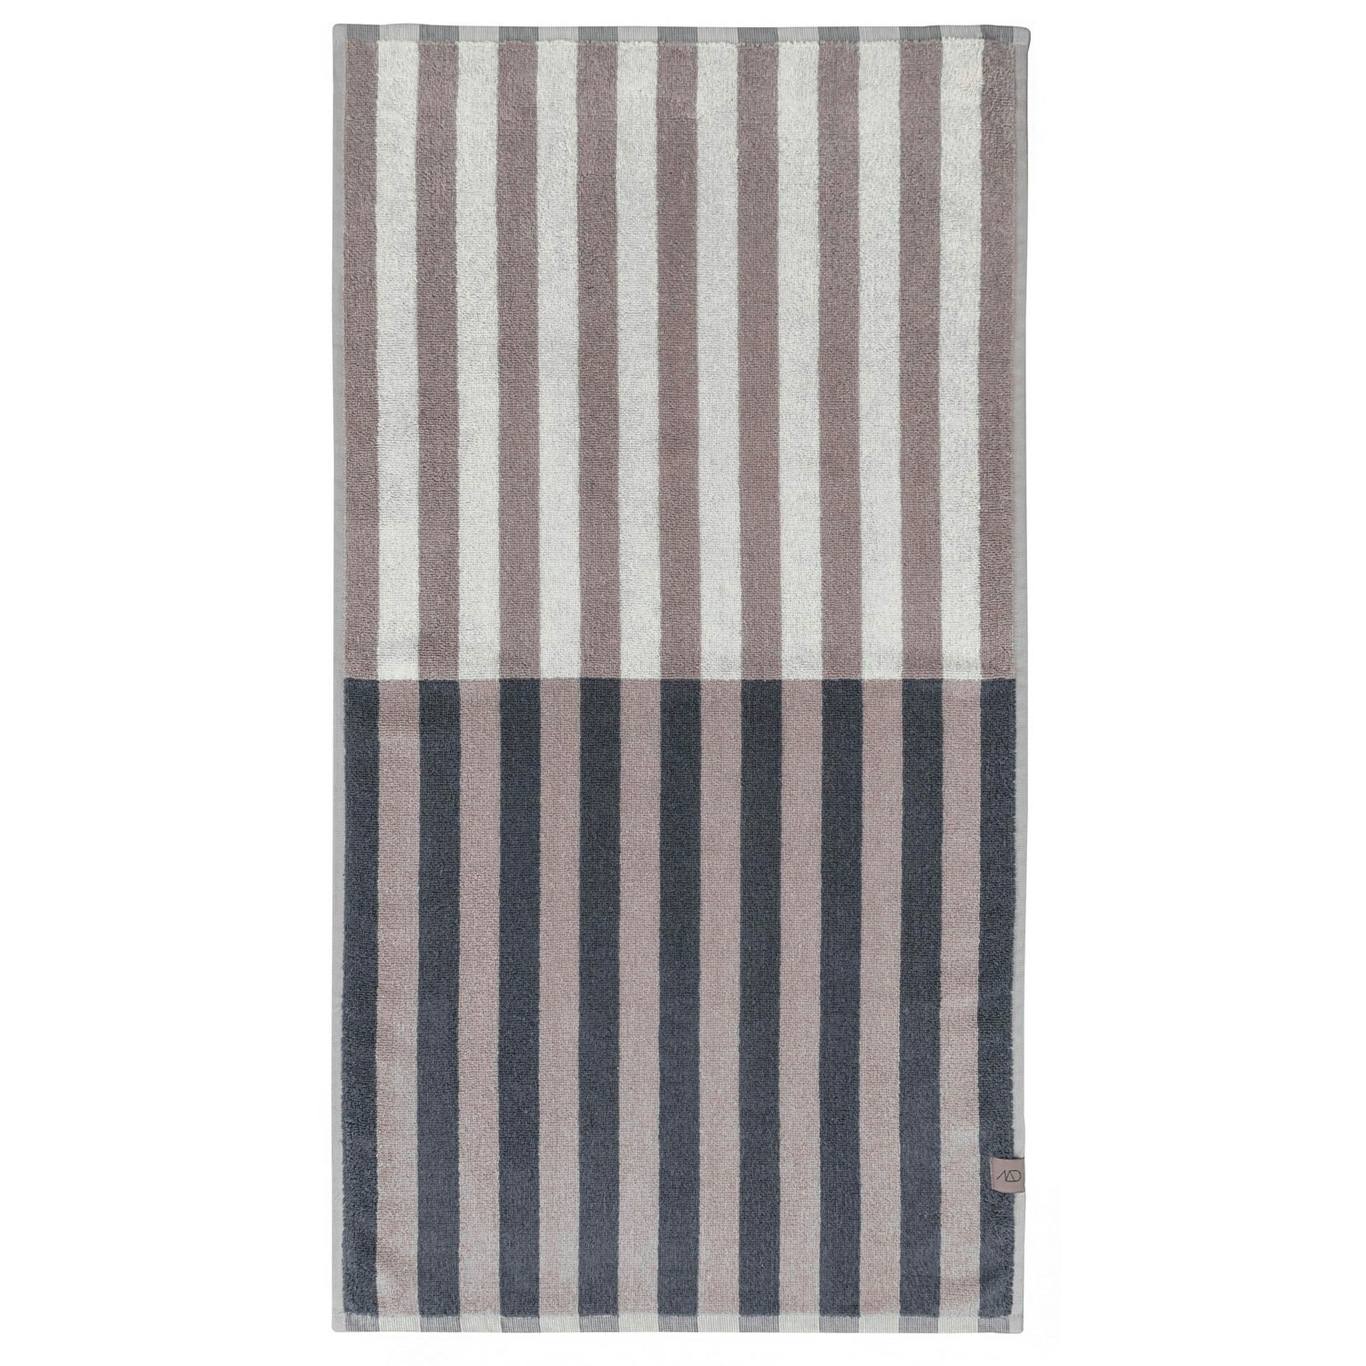 Disorder Towel 50x90 cm, Off-white